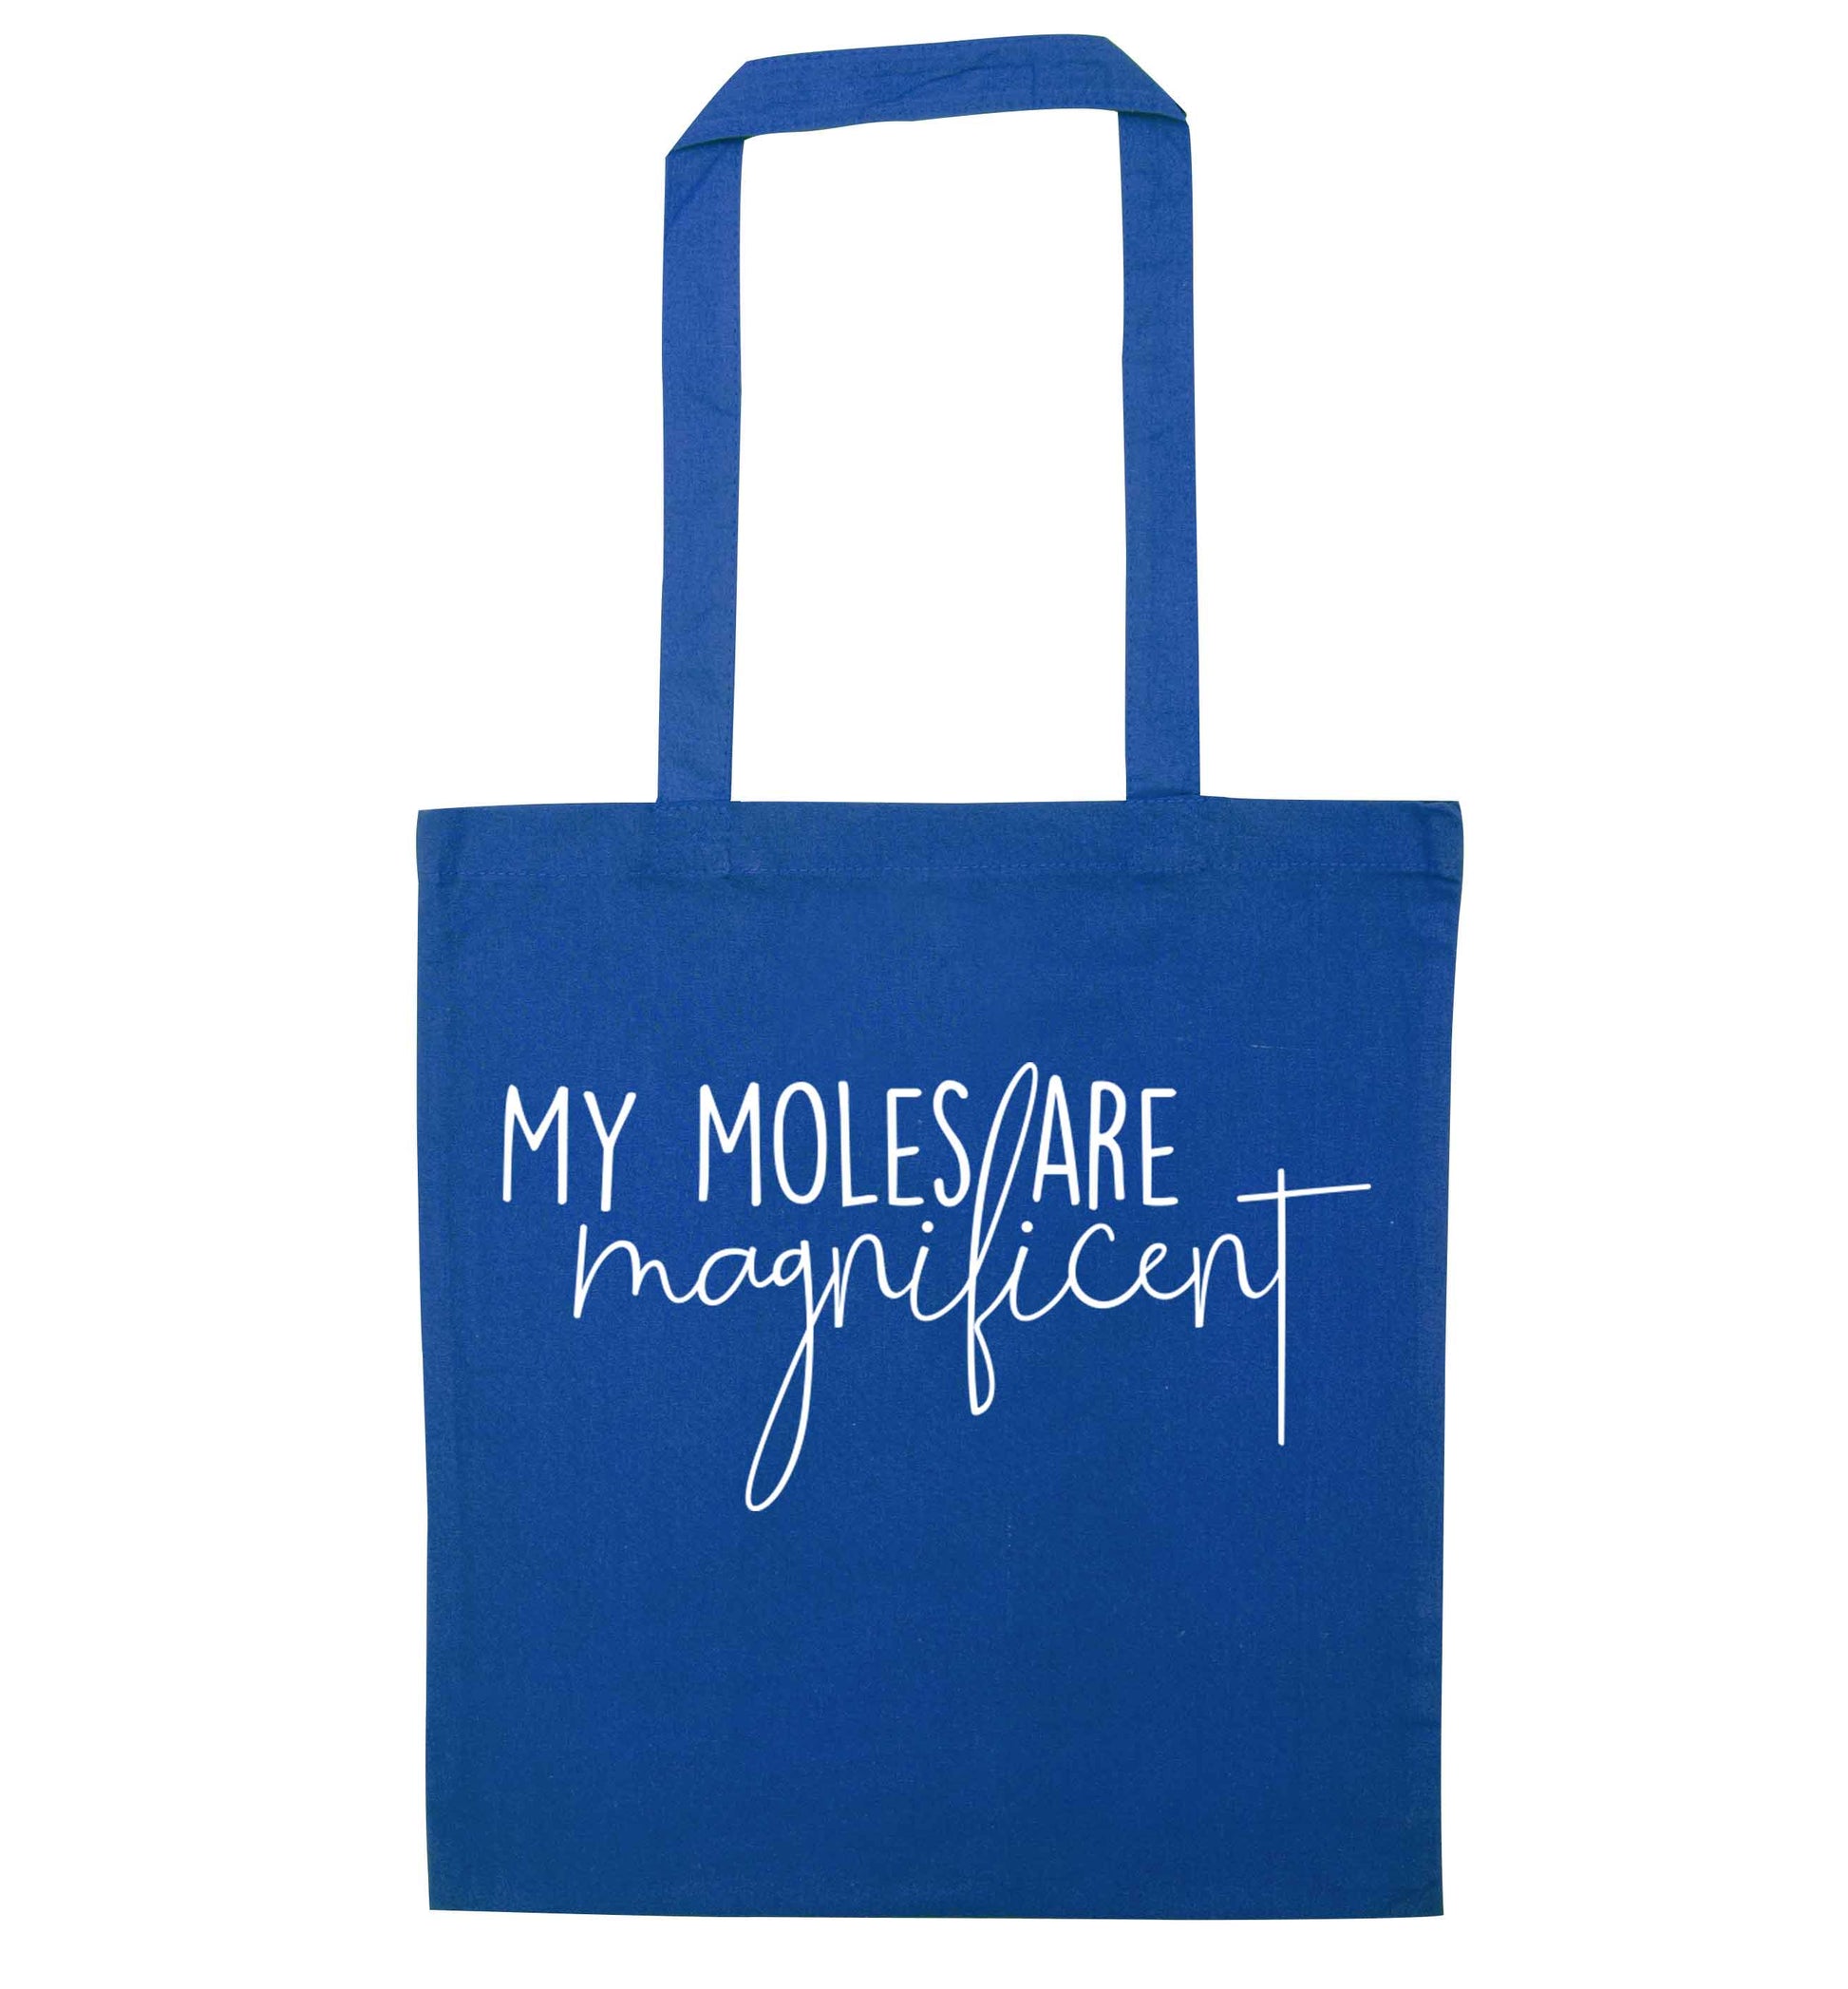 My moles are magnificent blue tote bag